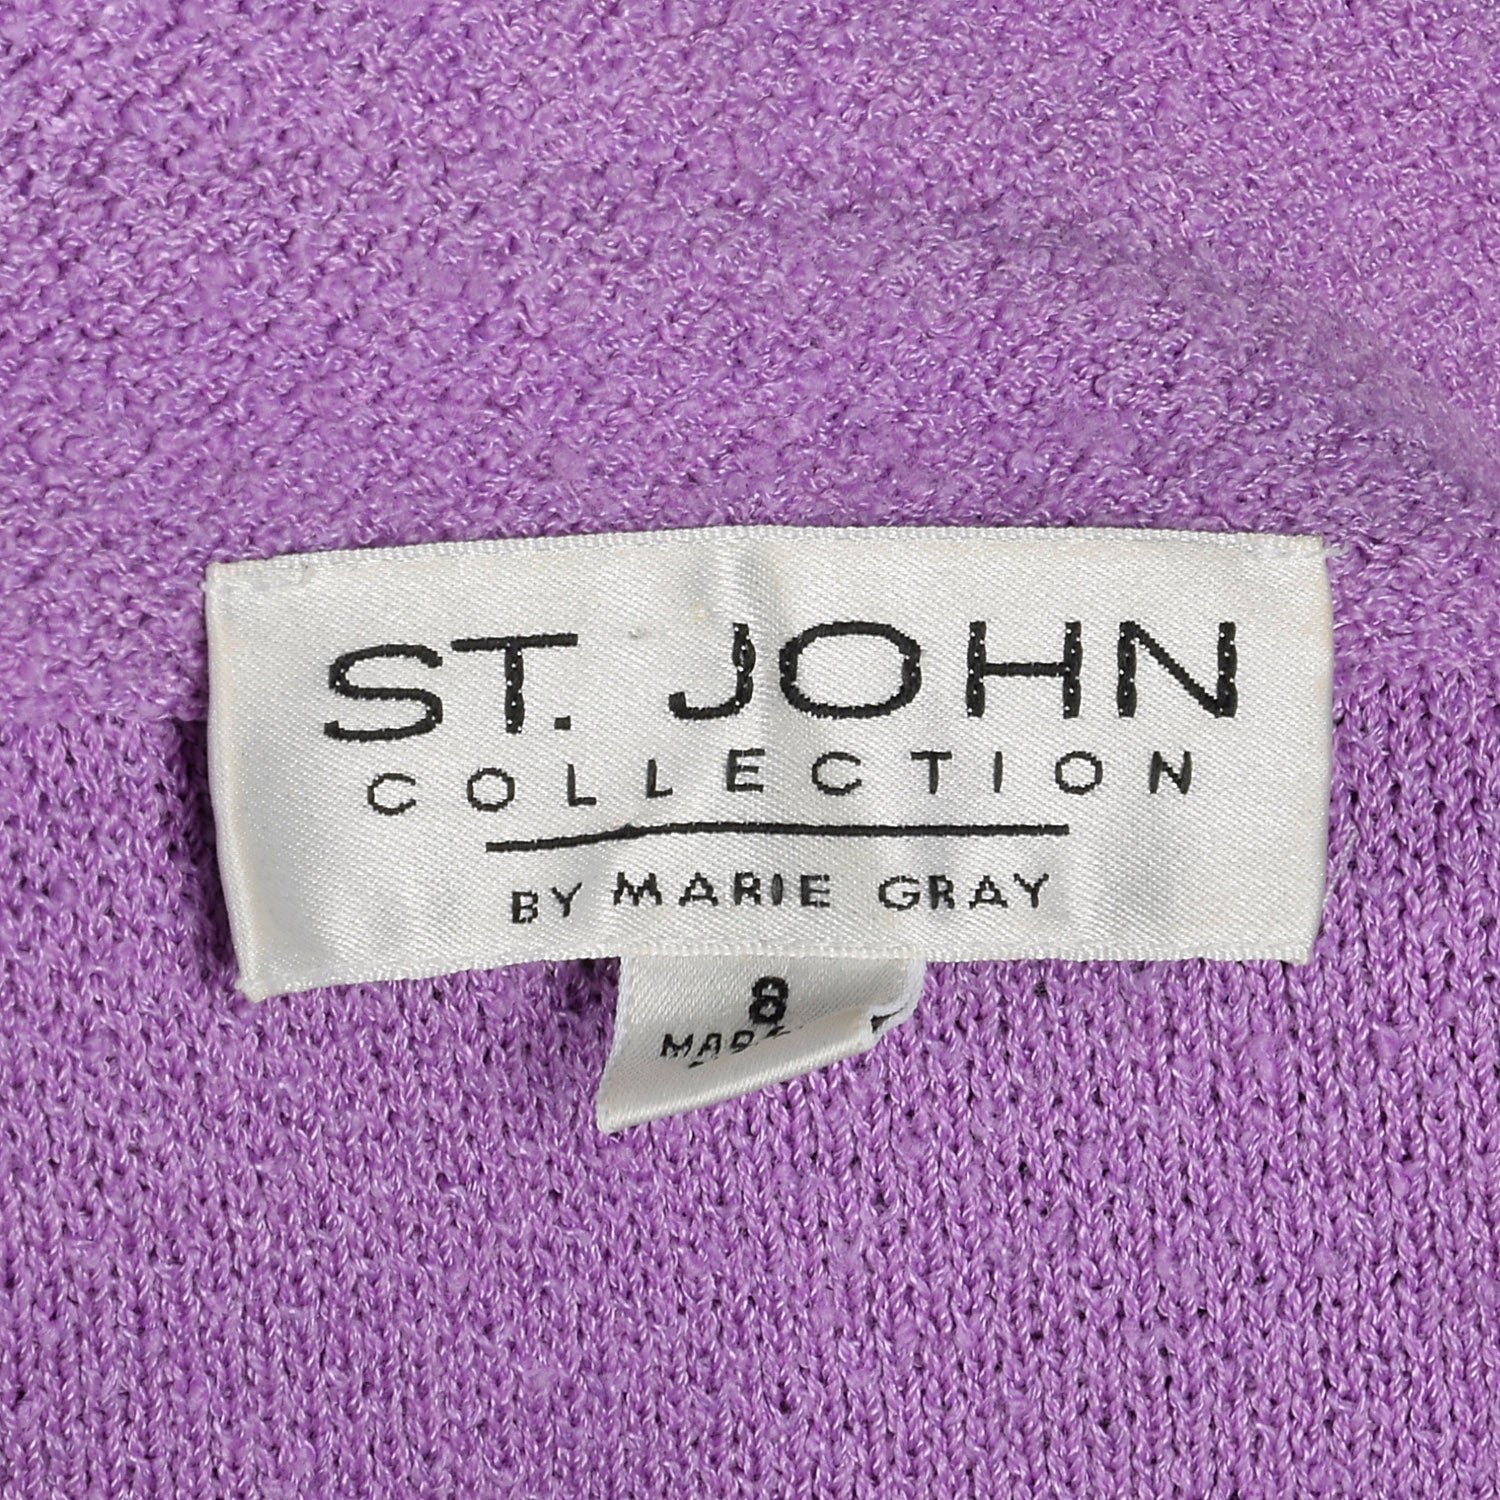 1990s St John Knit Lavender Purple Jacket